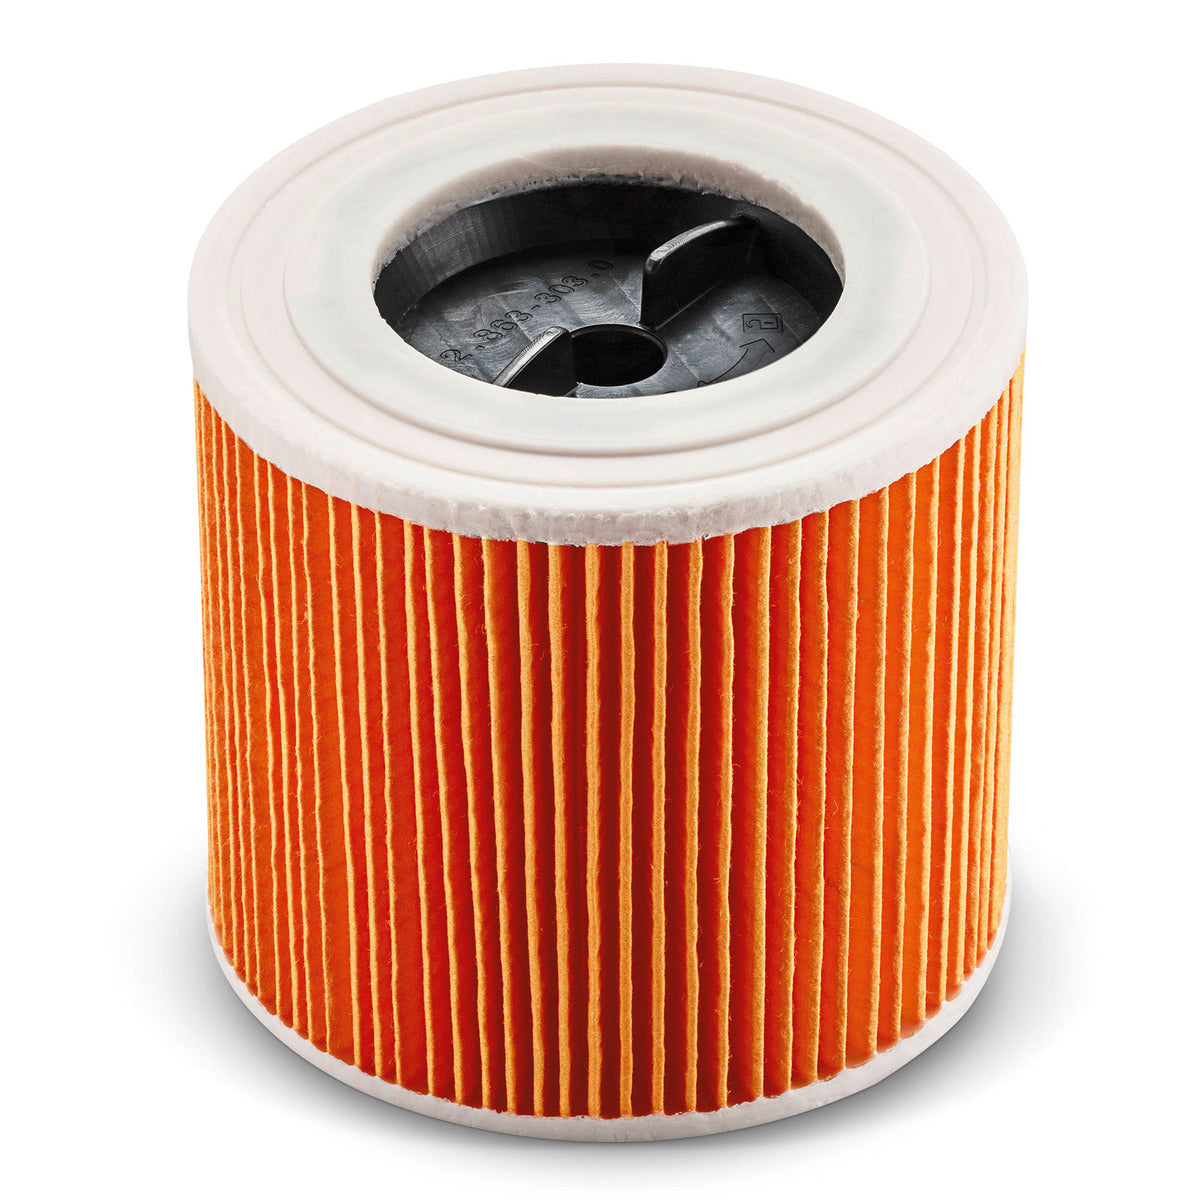 One-piece cartridge filter